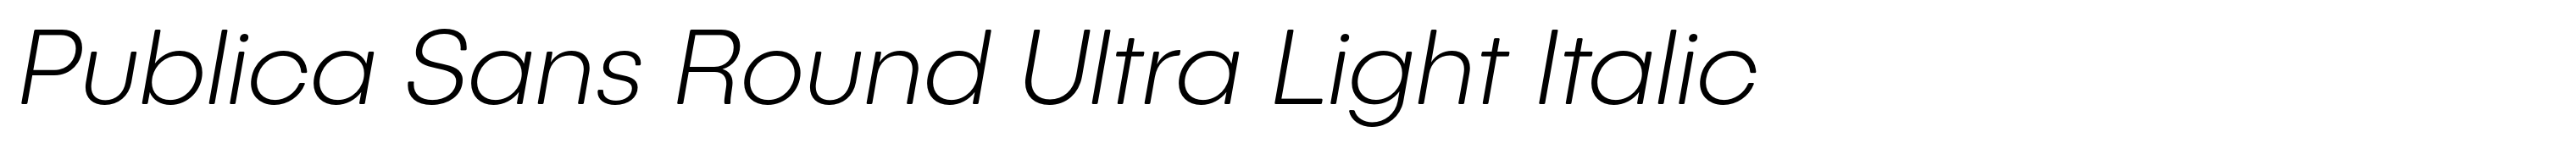 Publica Sans Round Ultra Light Italic